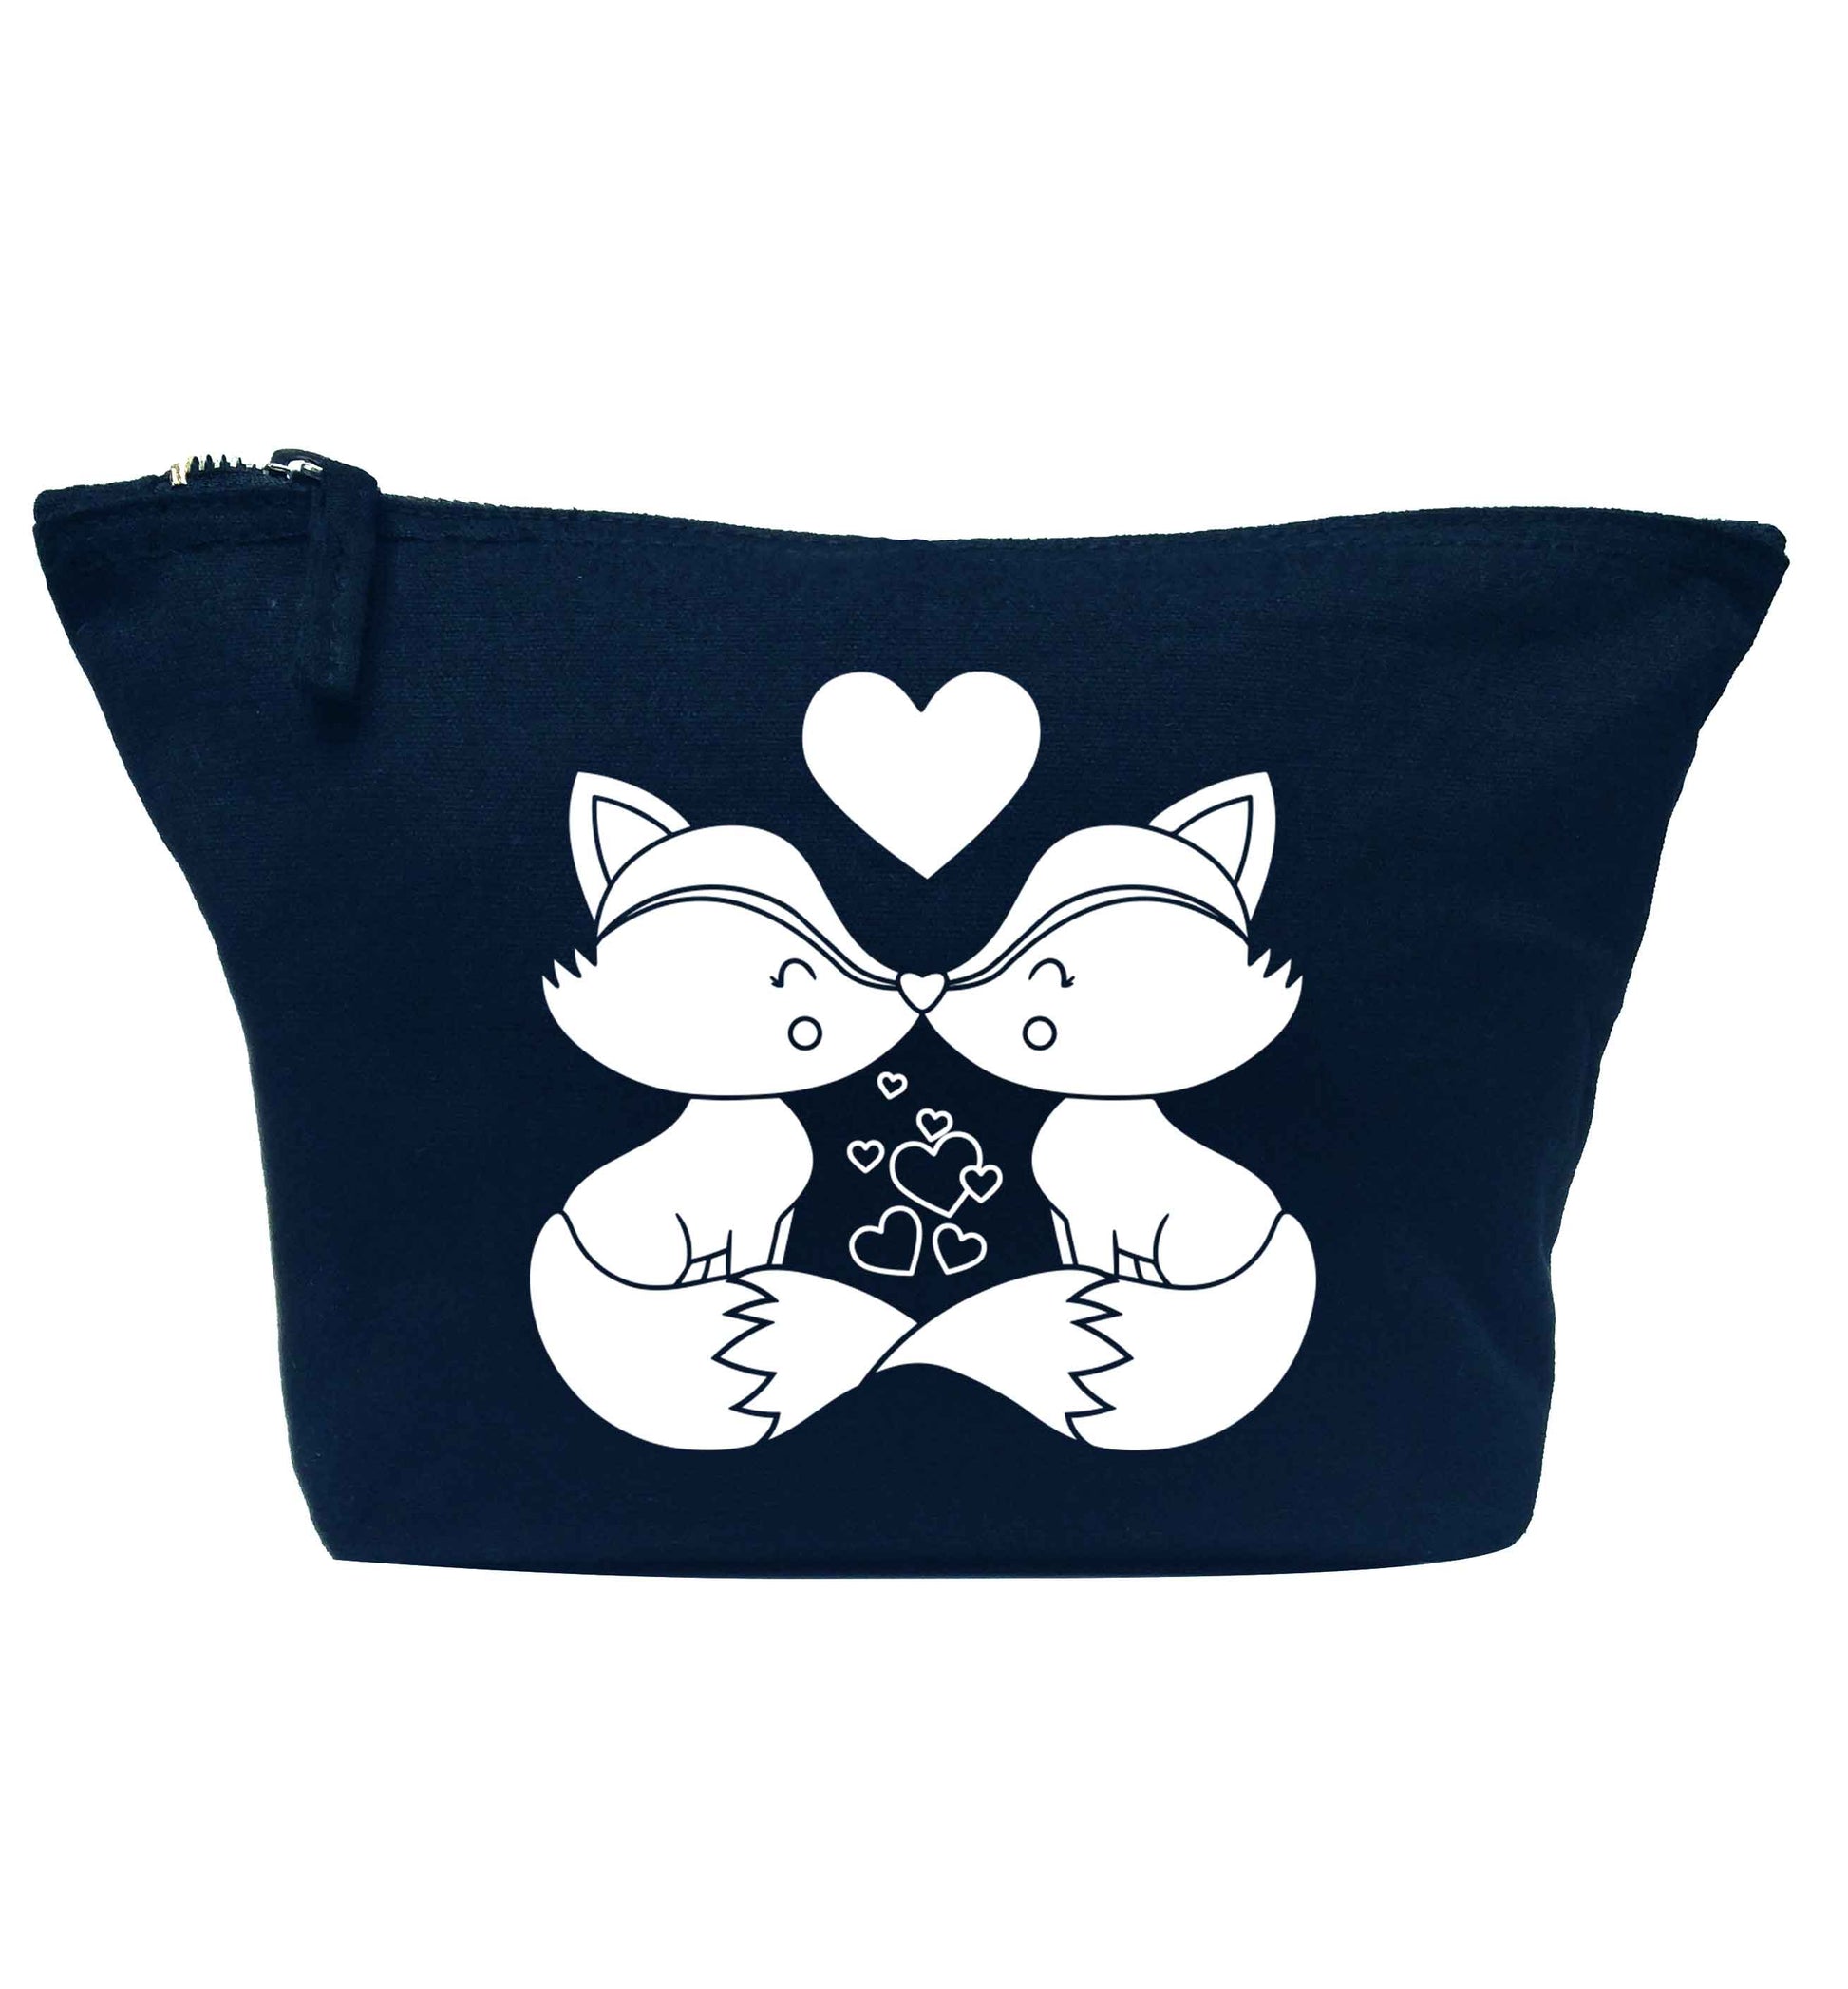 Valentines fox illustration navy makeup bag